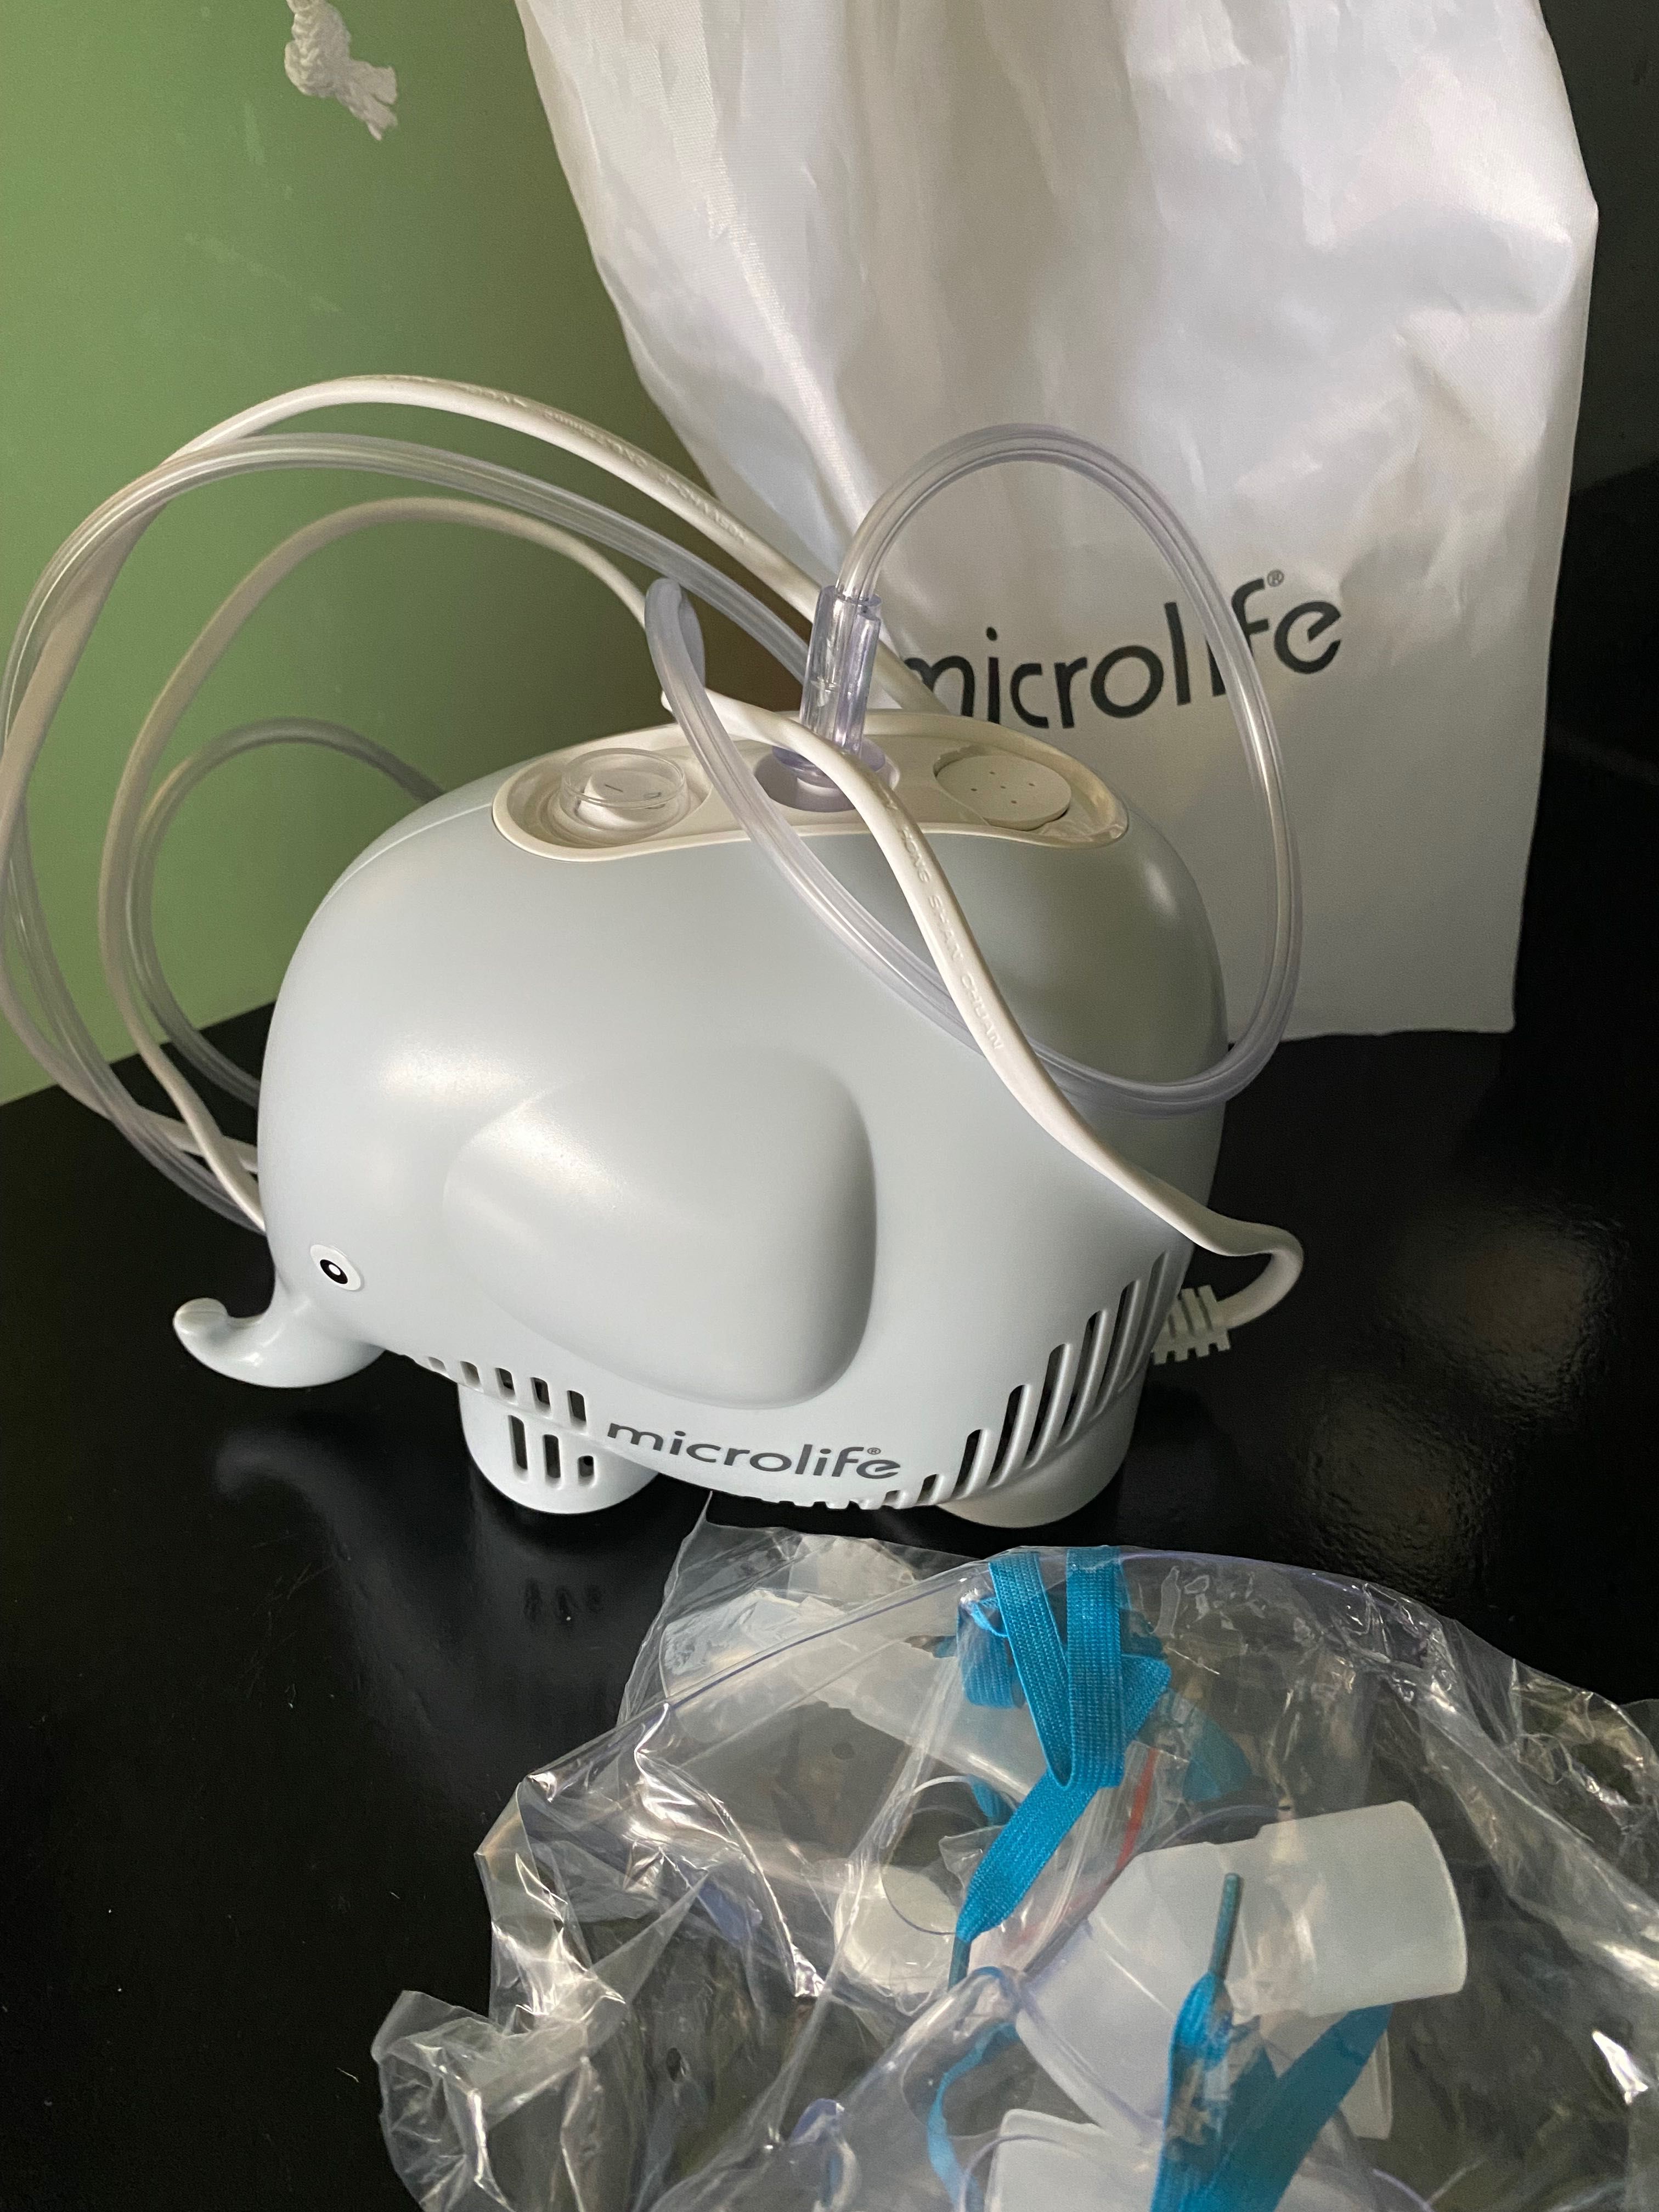 Inhalator nibulizator microlife